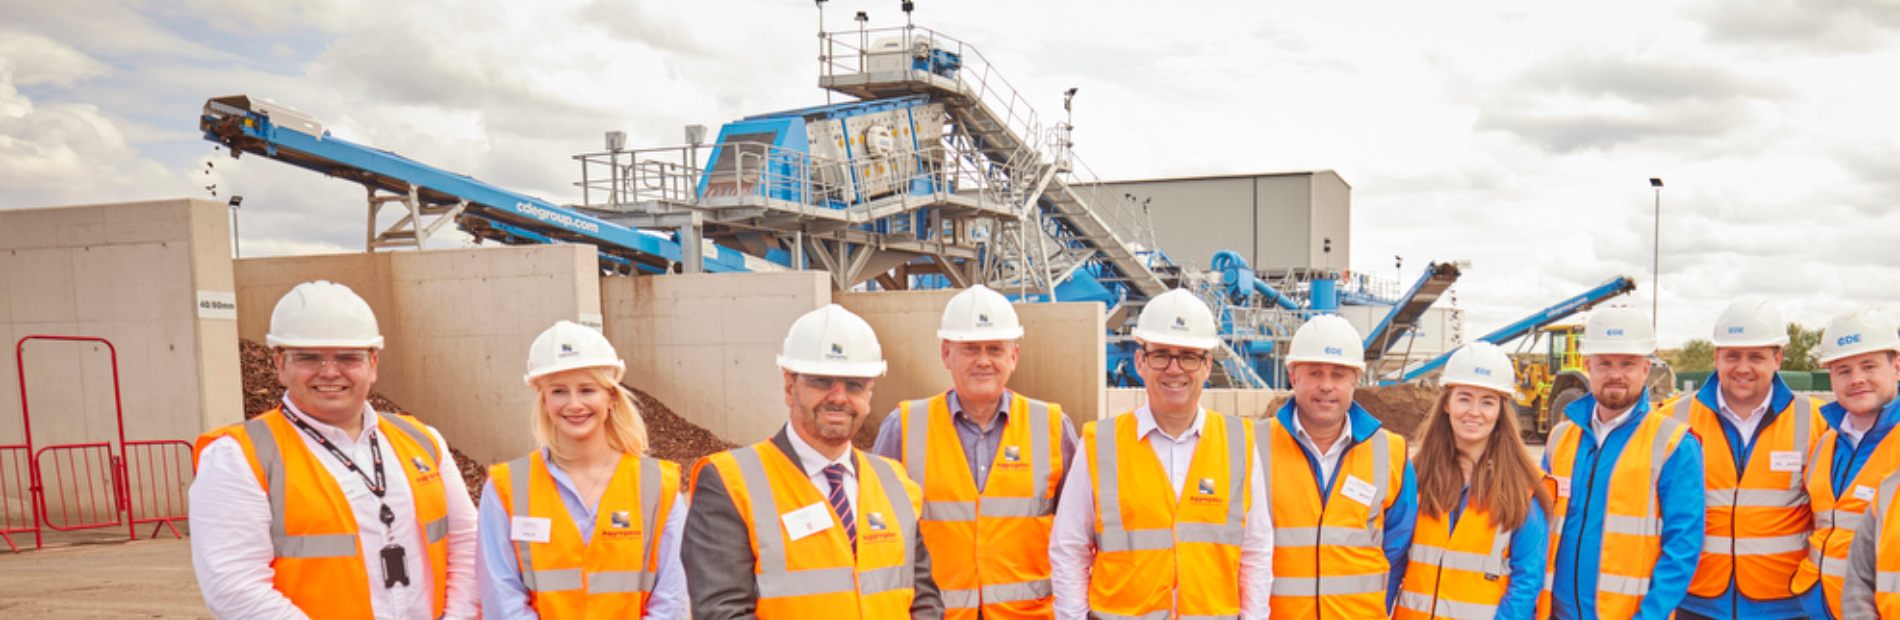 Andy Burnham Visits NRE Aggregates Recycling Facility